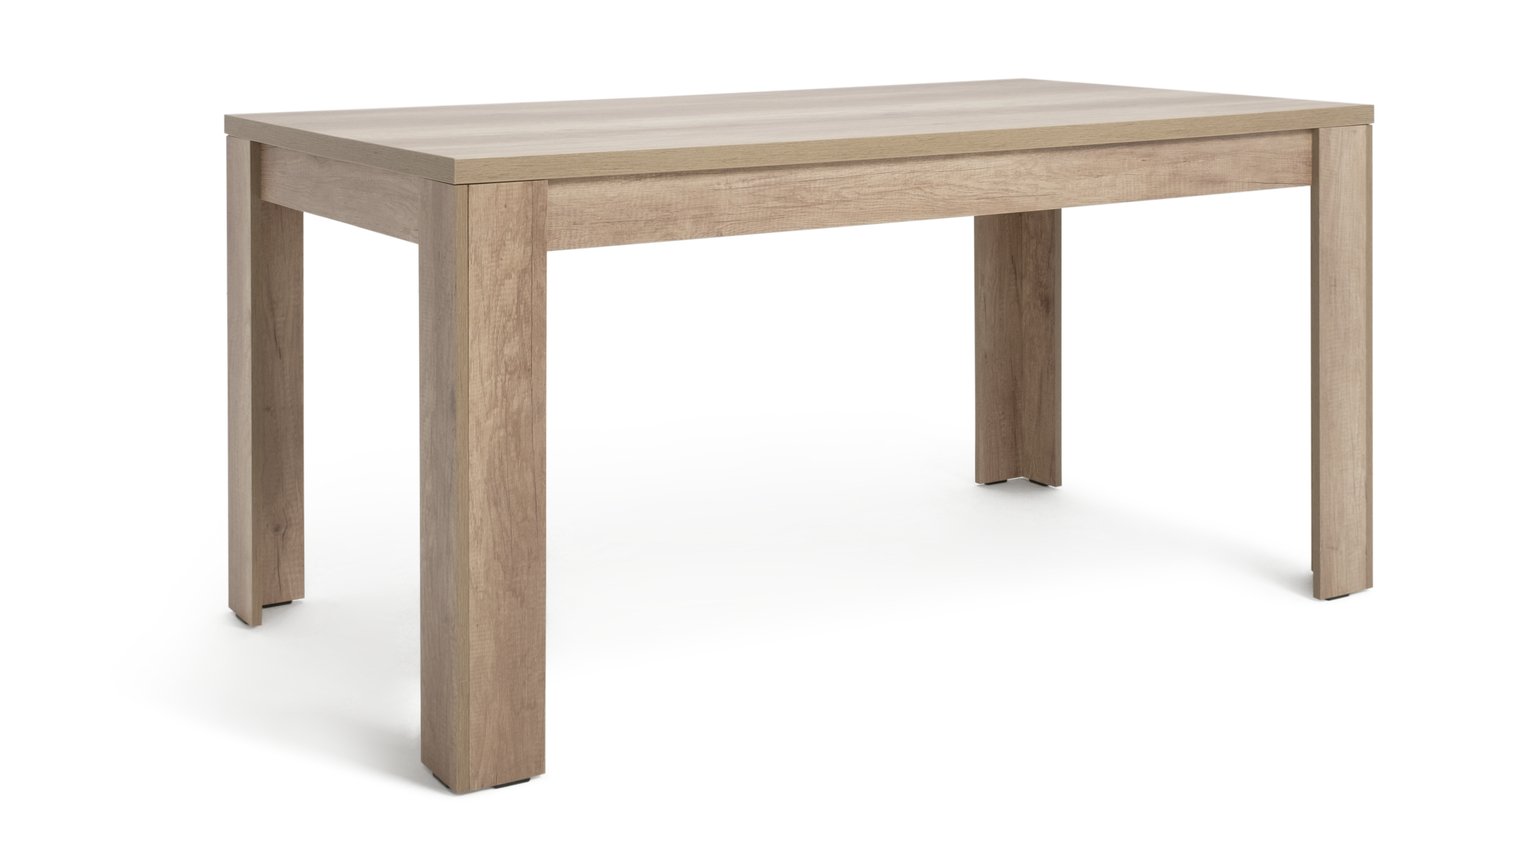 Argos Home Preston Wood Effect 6 Seater Dining Table - Oak